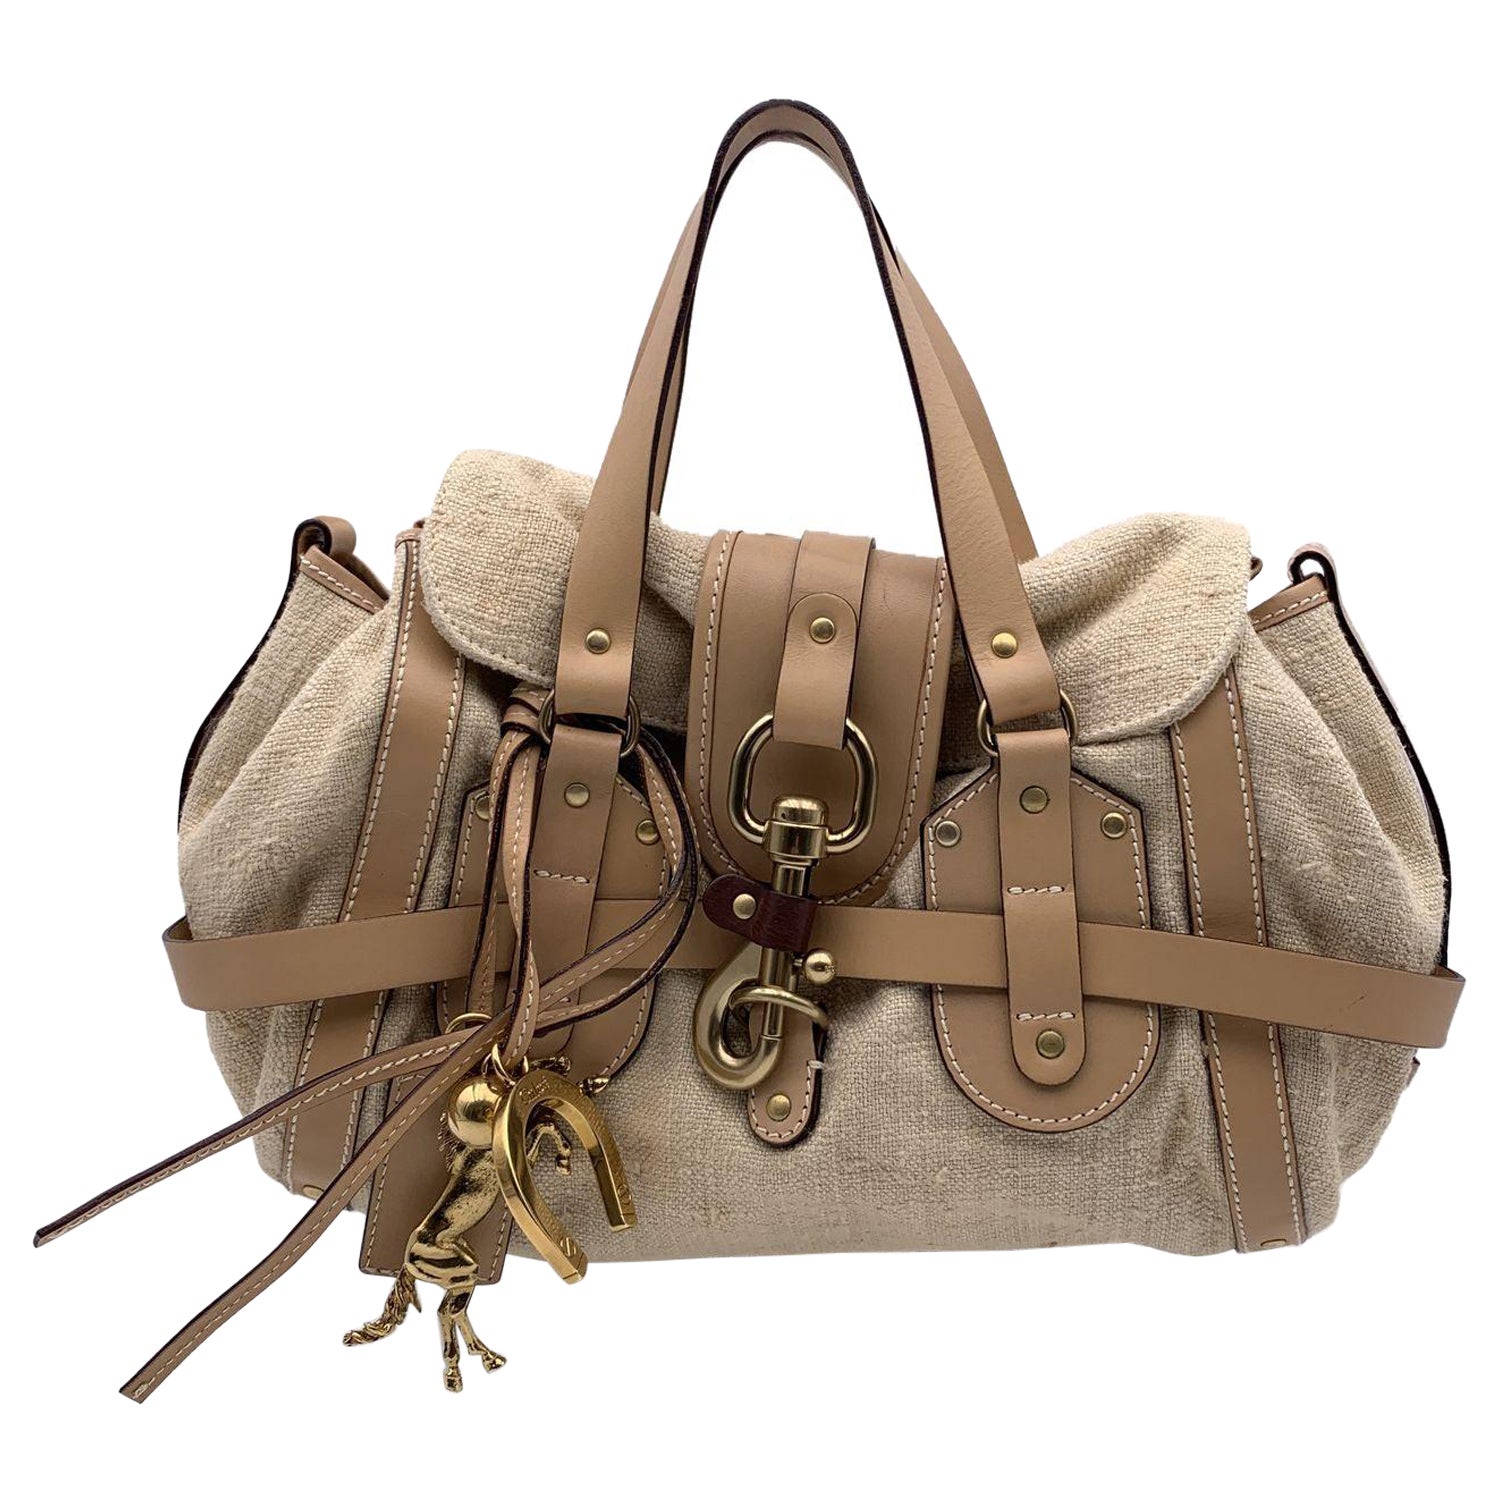 Chloe Beige Canvas and Leather Kerala Bag Satchel Handbag